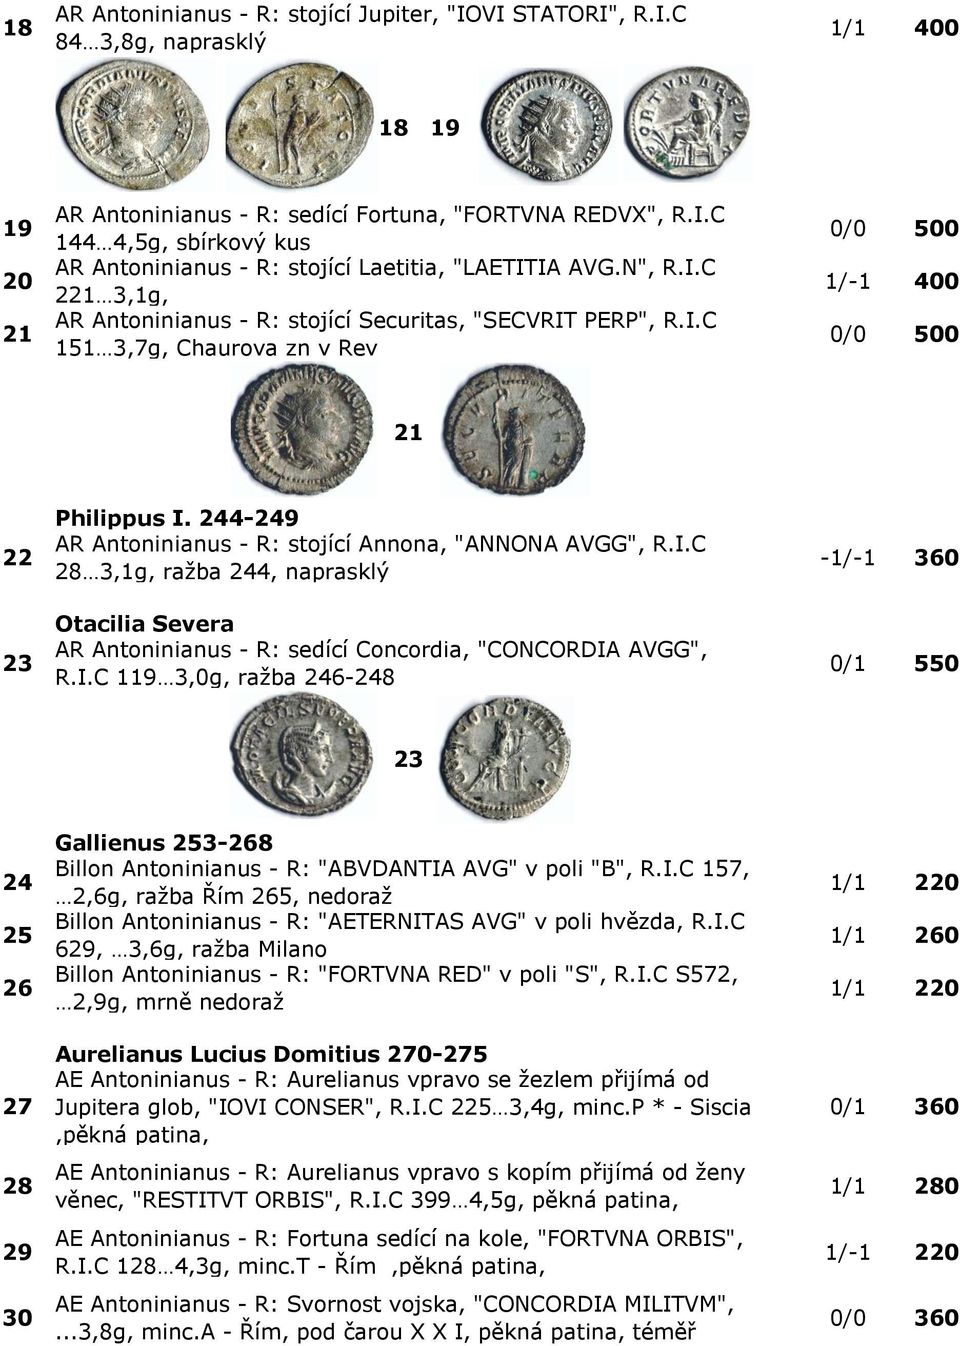 244-249 AR Antoninianus - R: stojící Annona, "ANNONA AVGG", R.I.